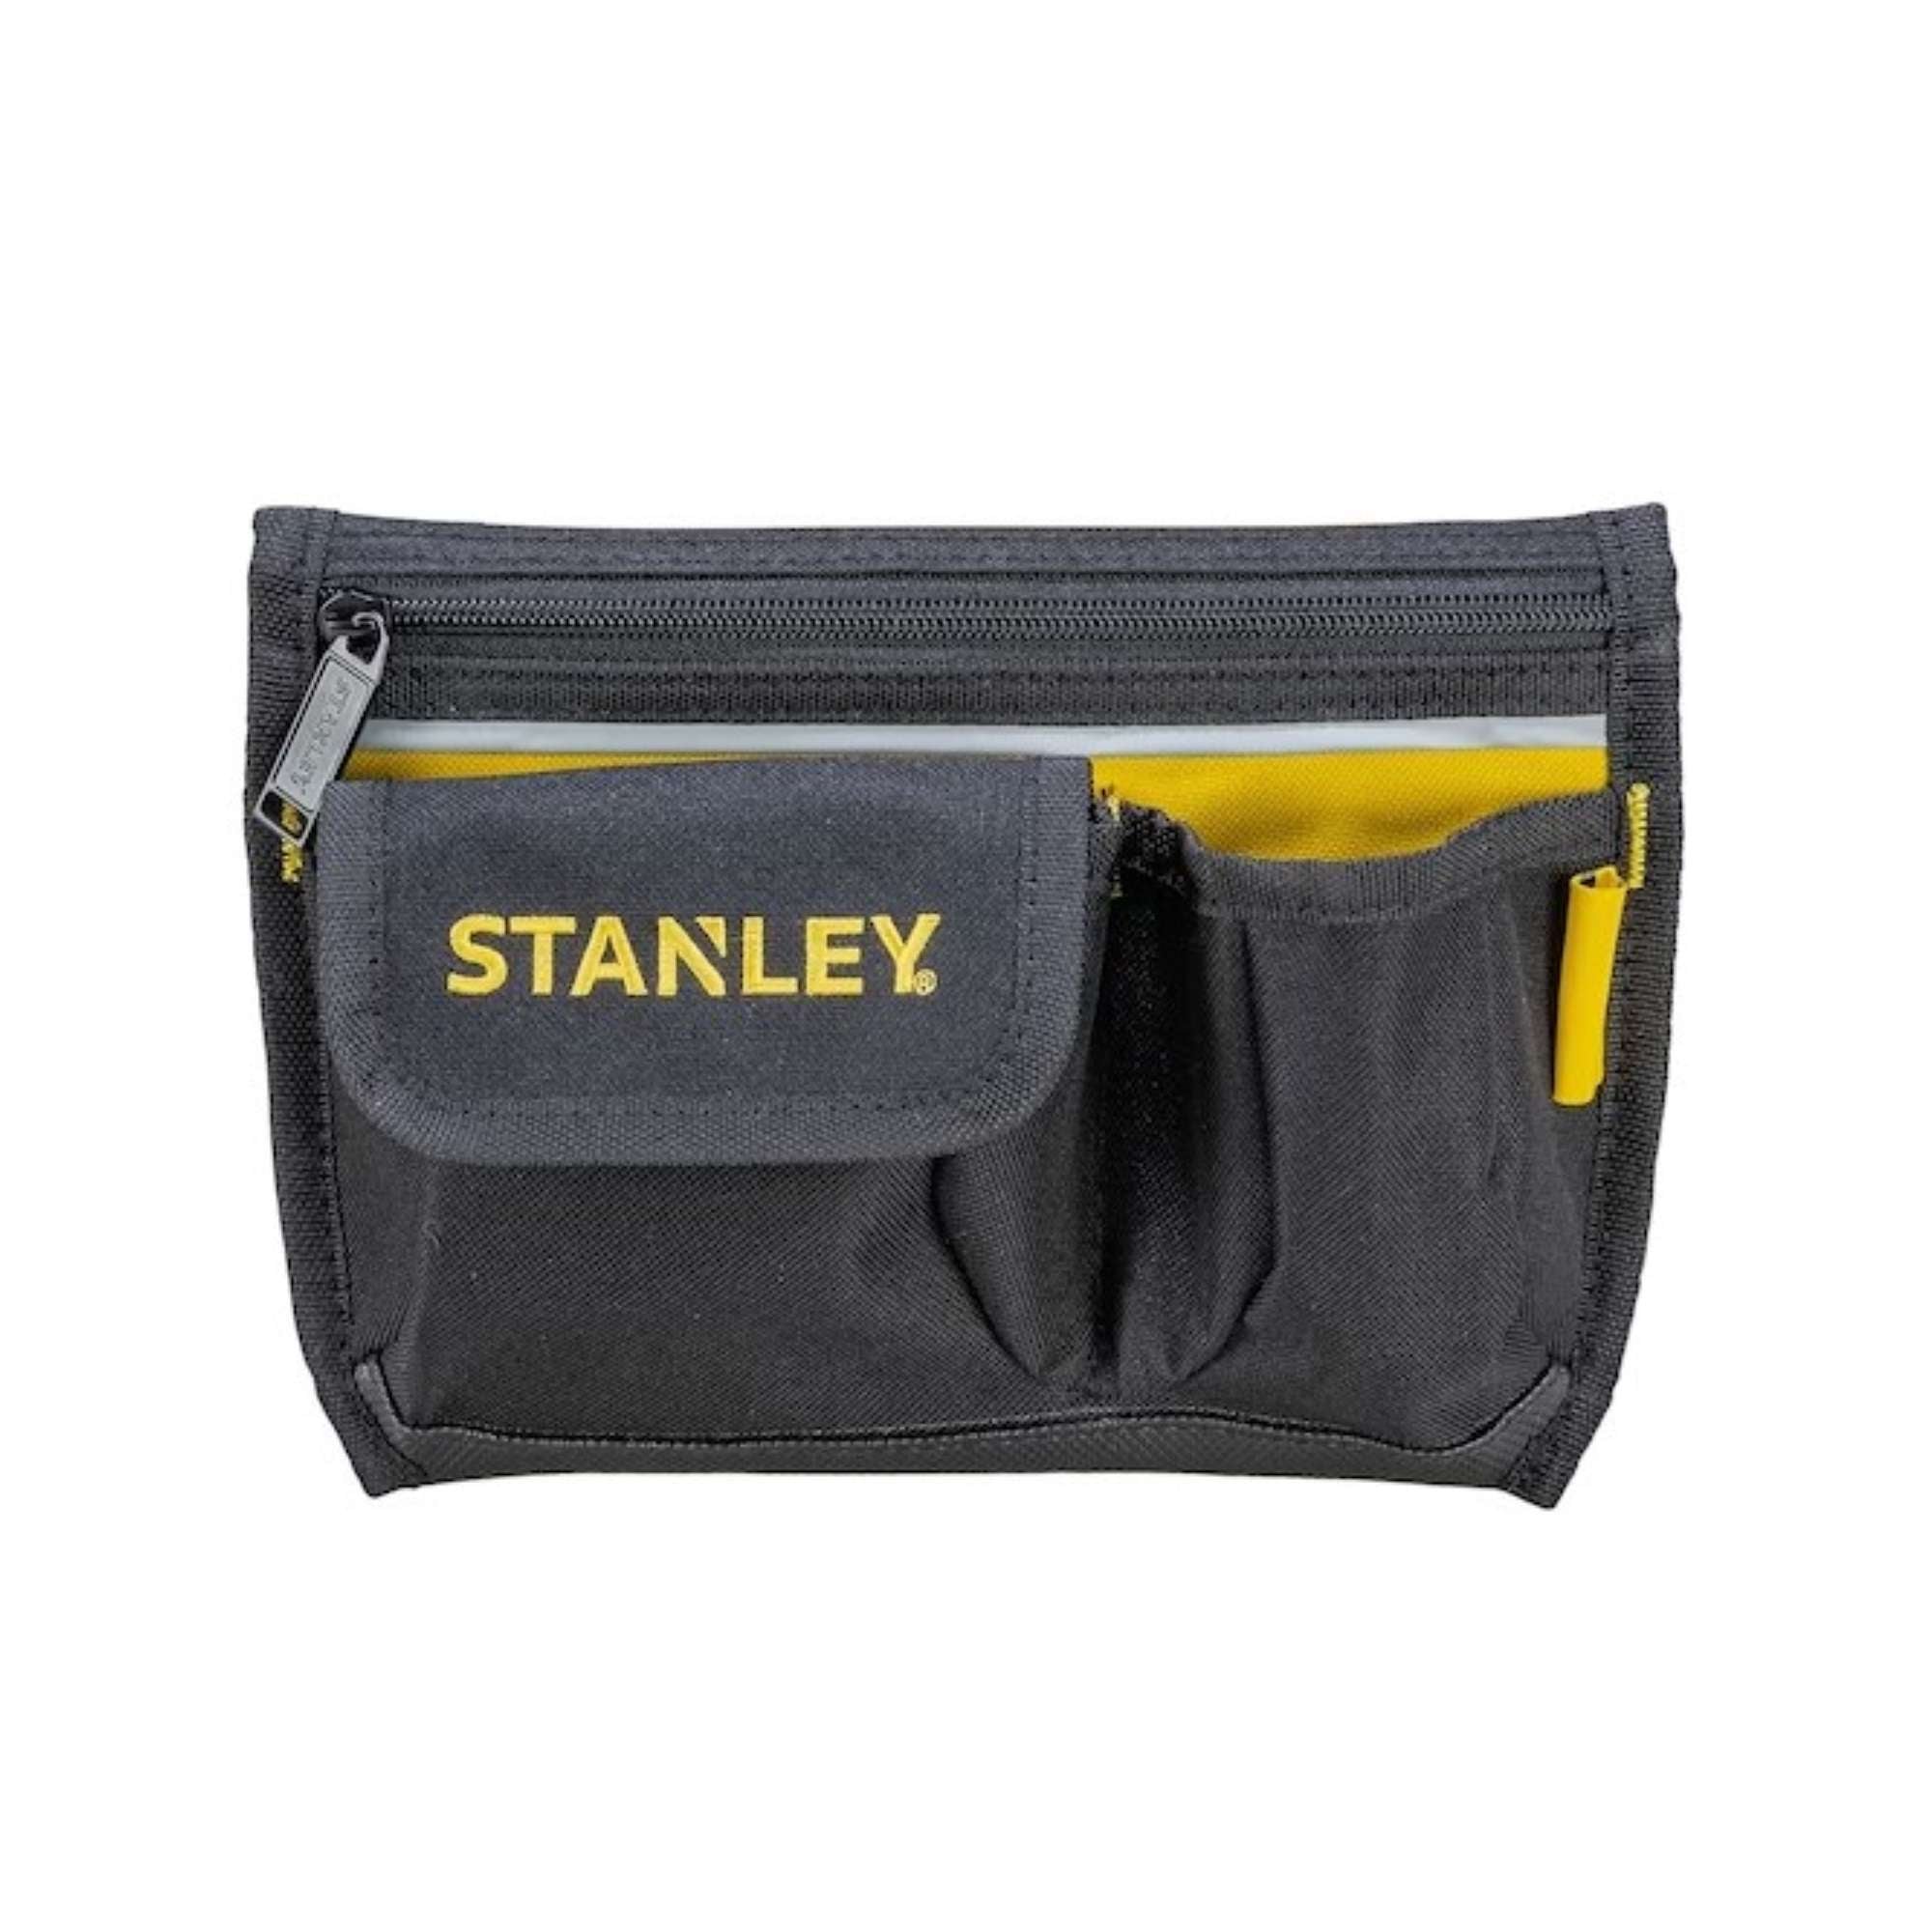 Waist bag, large pocket with zip closure - Stanley 1-96-179